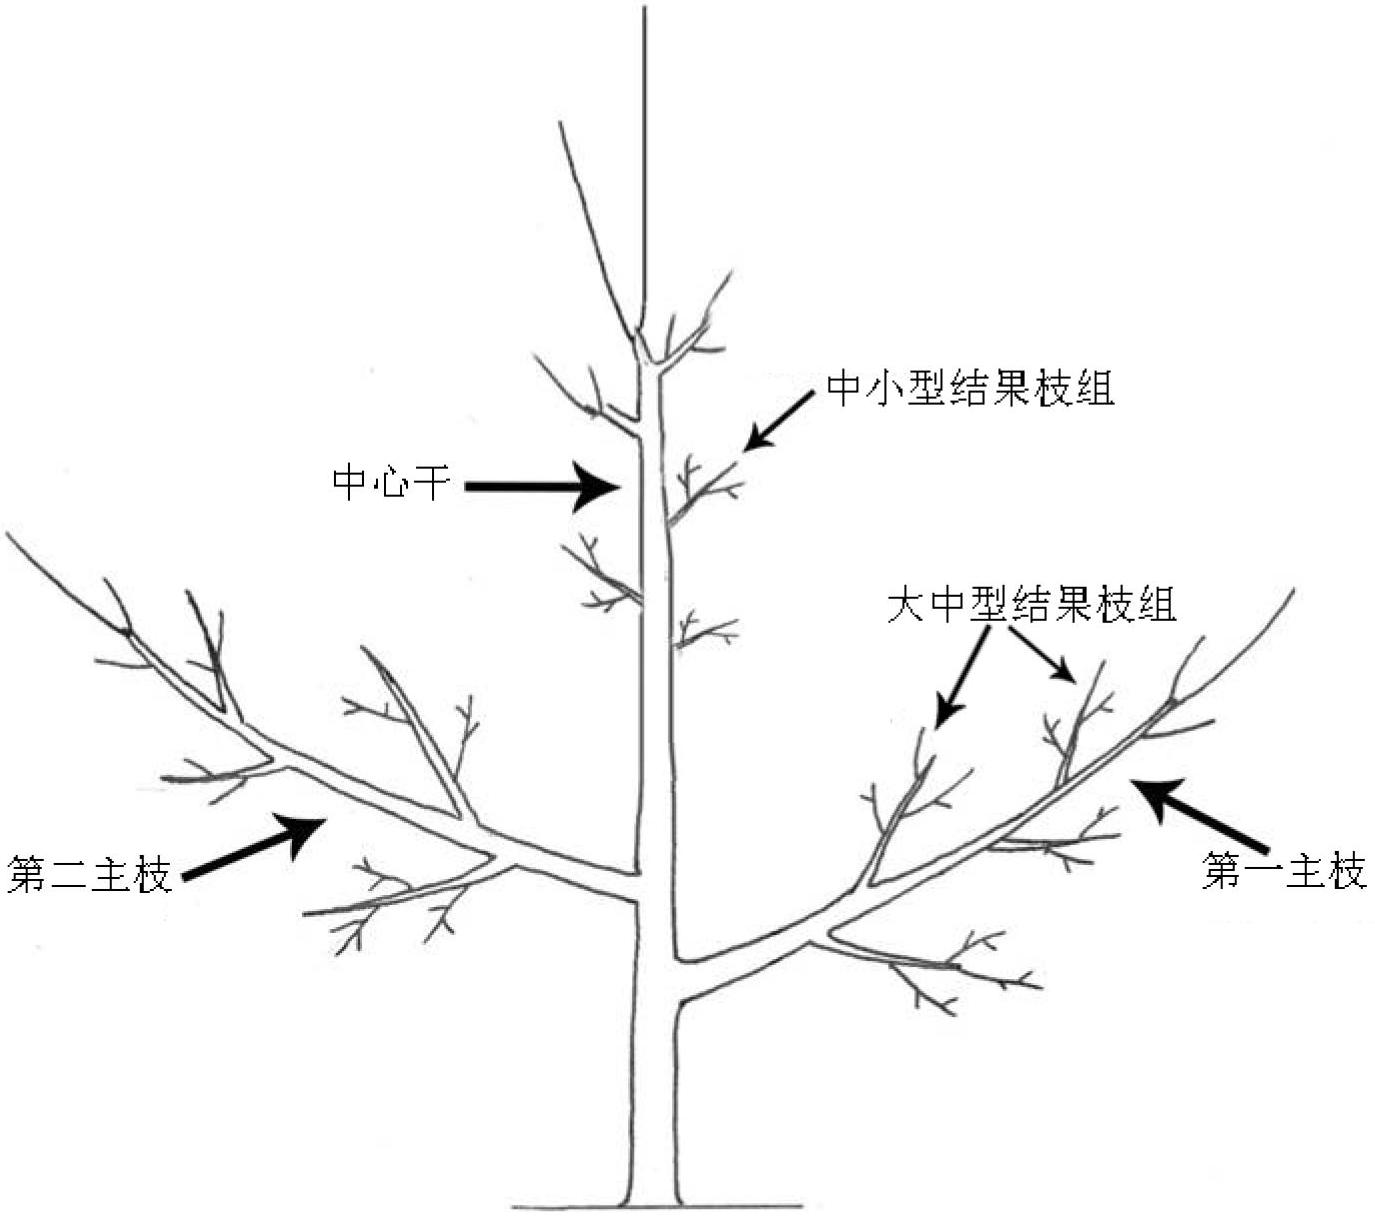 Downward-arrowhead-shaped tree shape of pear tree and shaping method for same